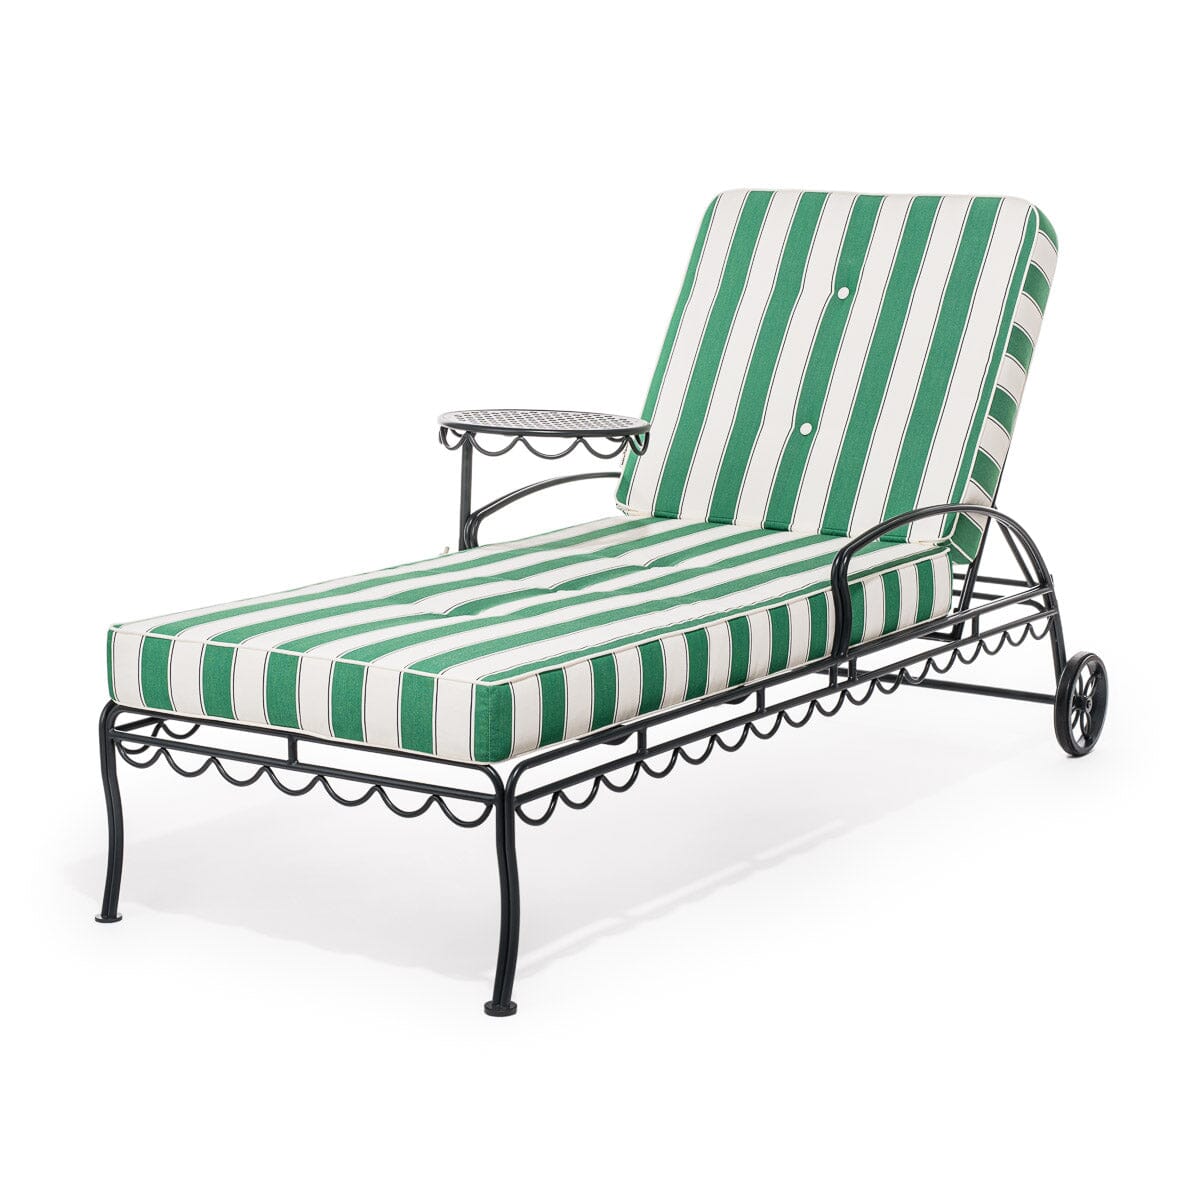 The Al Fresco Sun Lounger Cushion - STAUD Stripe Al Fresco Sun Lounger Cushions Business & Pleasure Co 